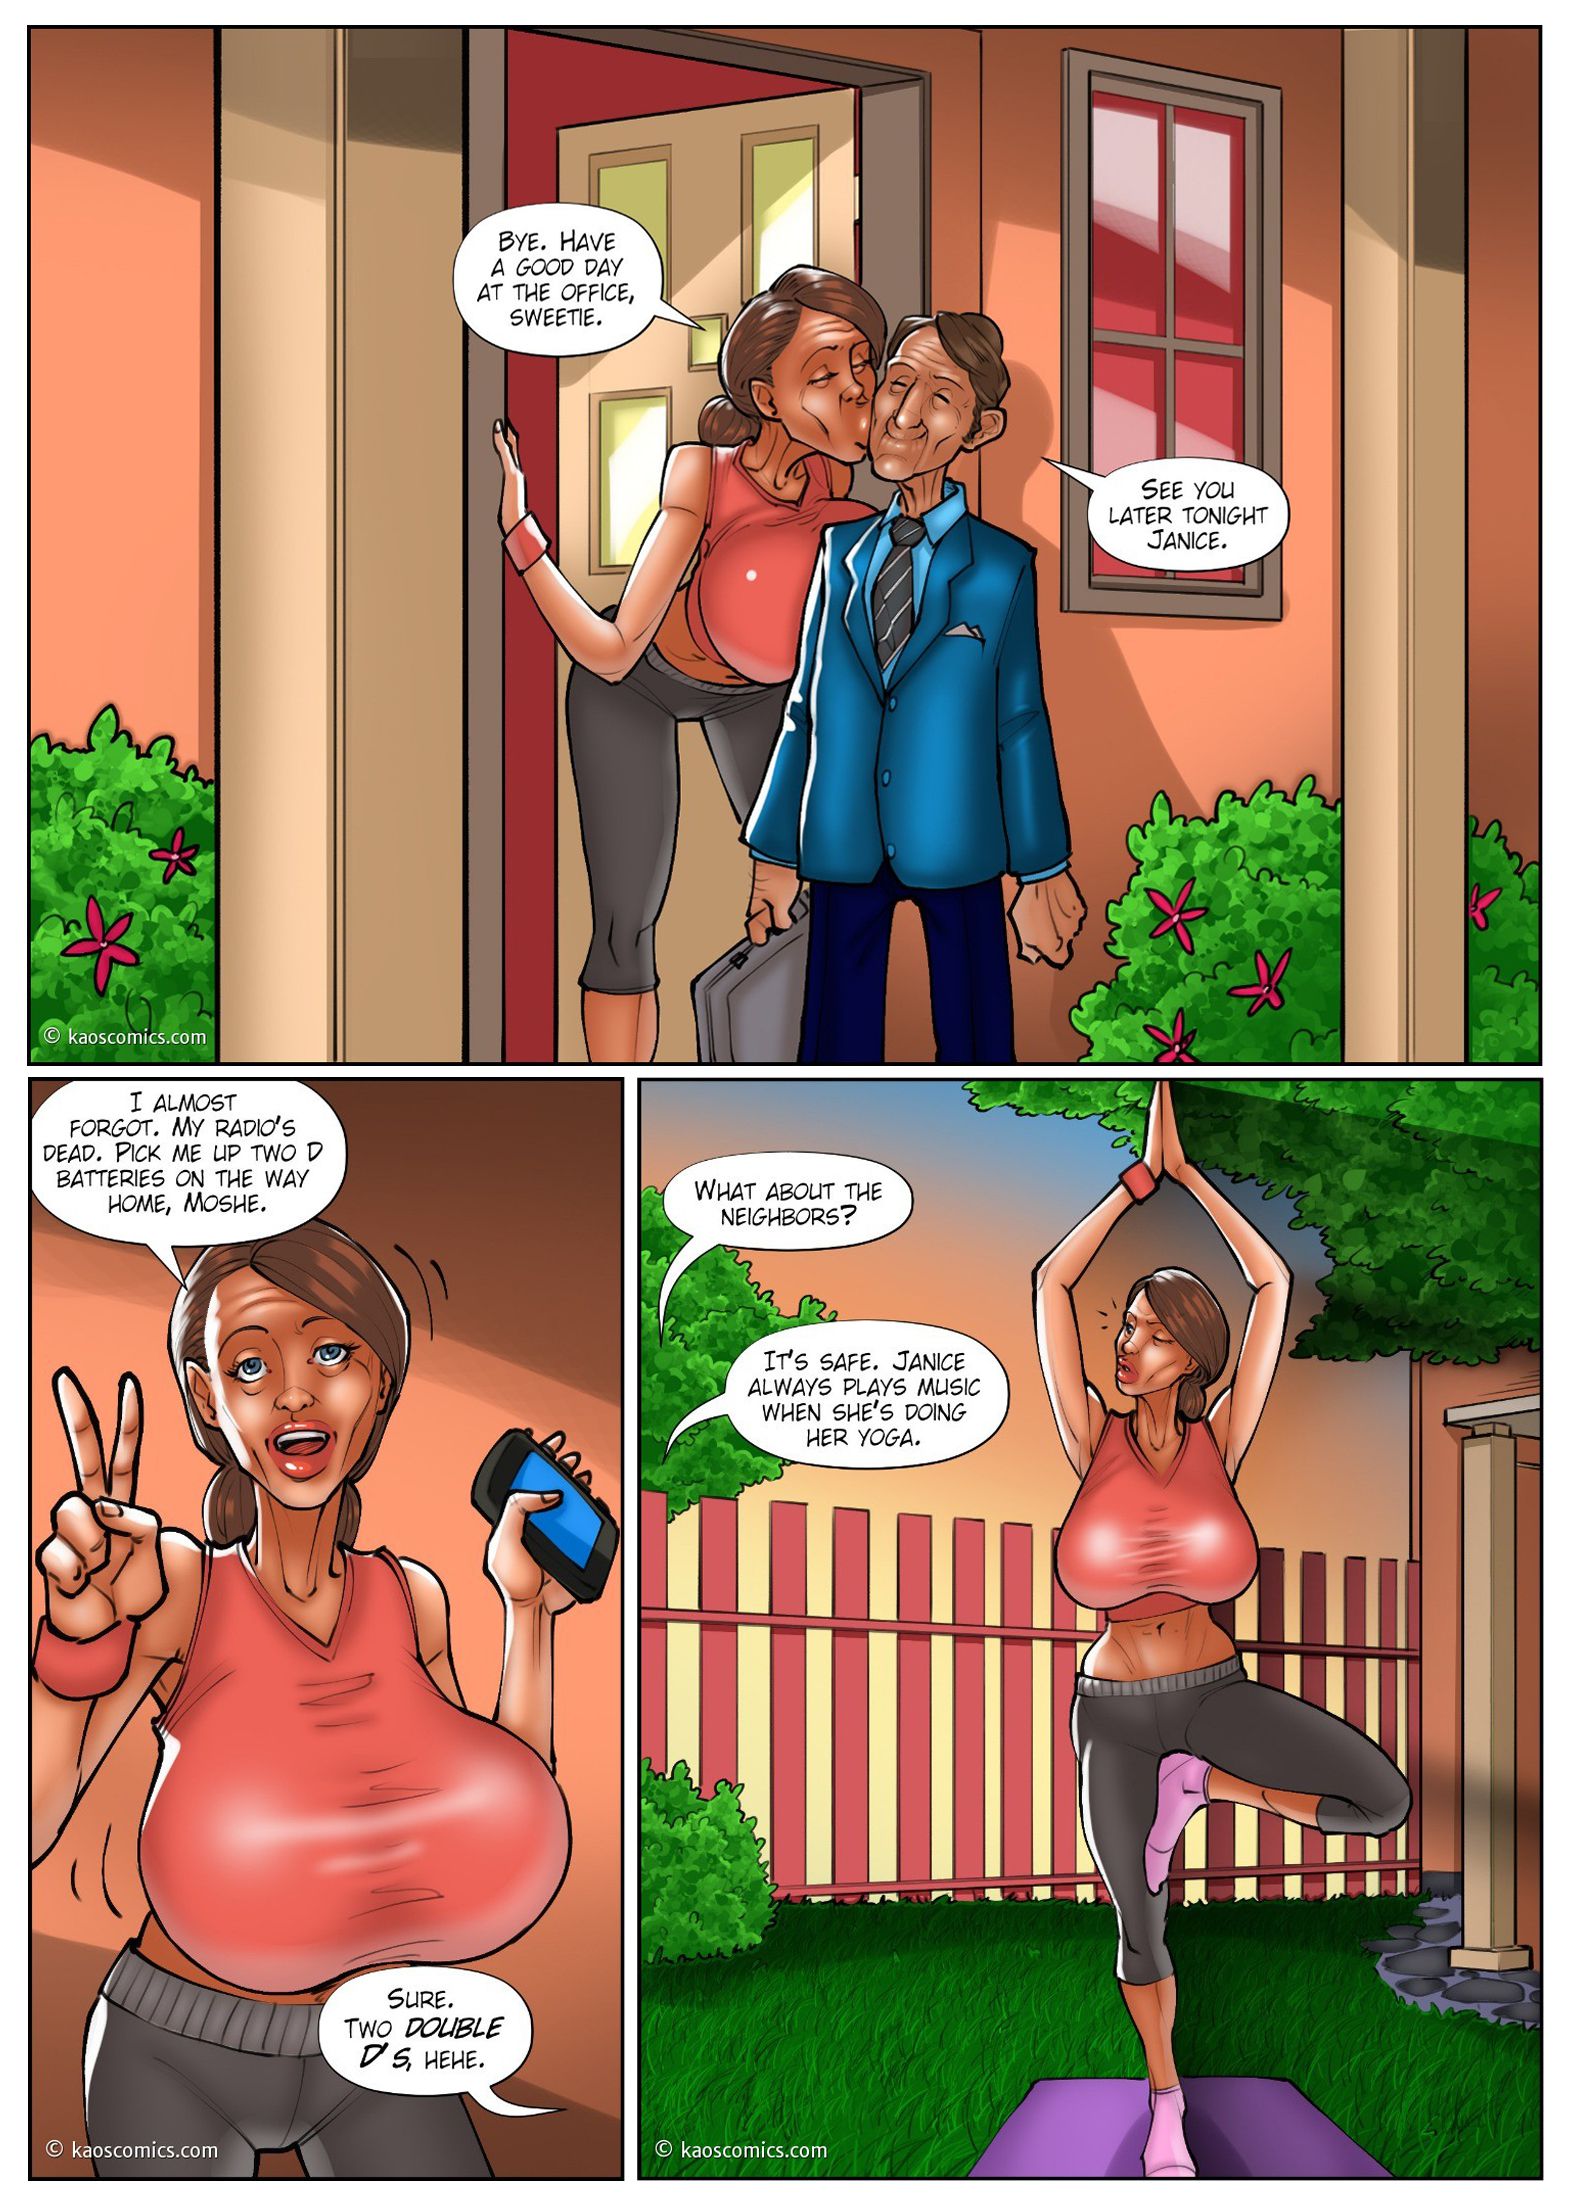 The Wife And The Black Gardeners KAOS Comics - 3  pic image